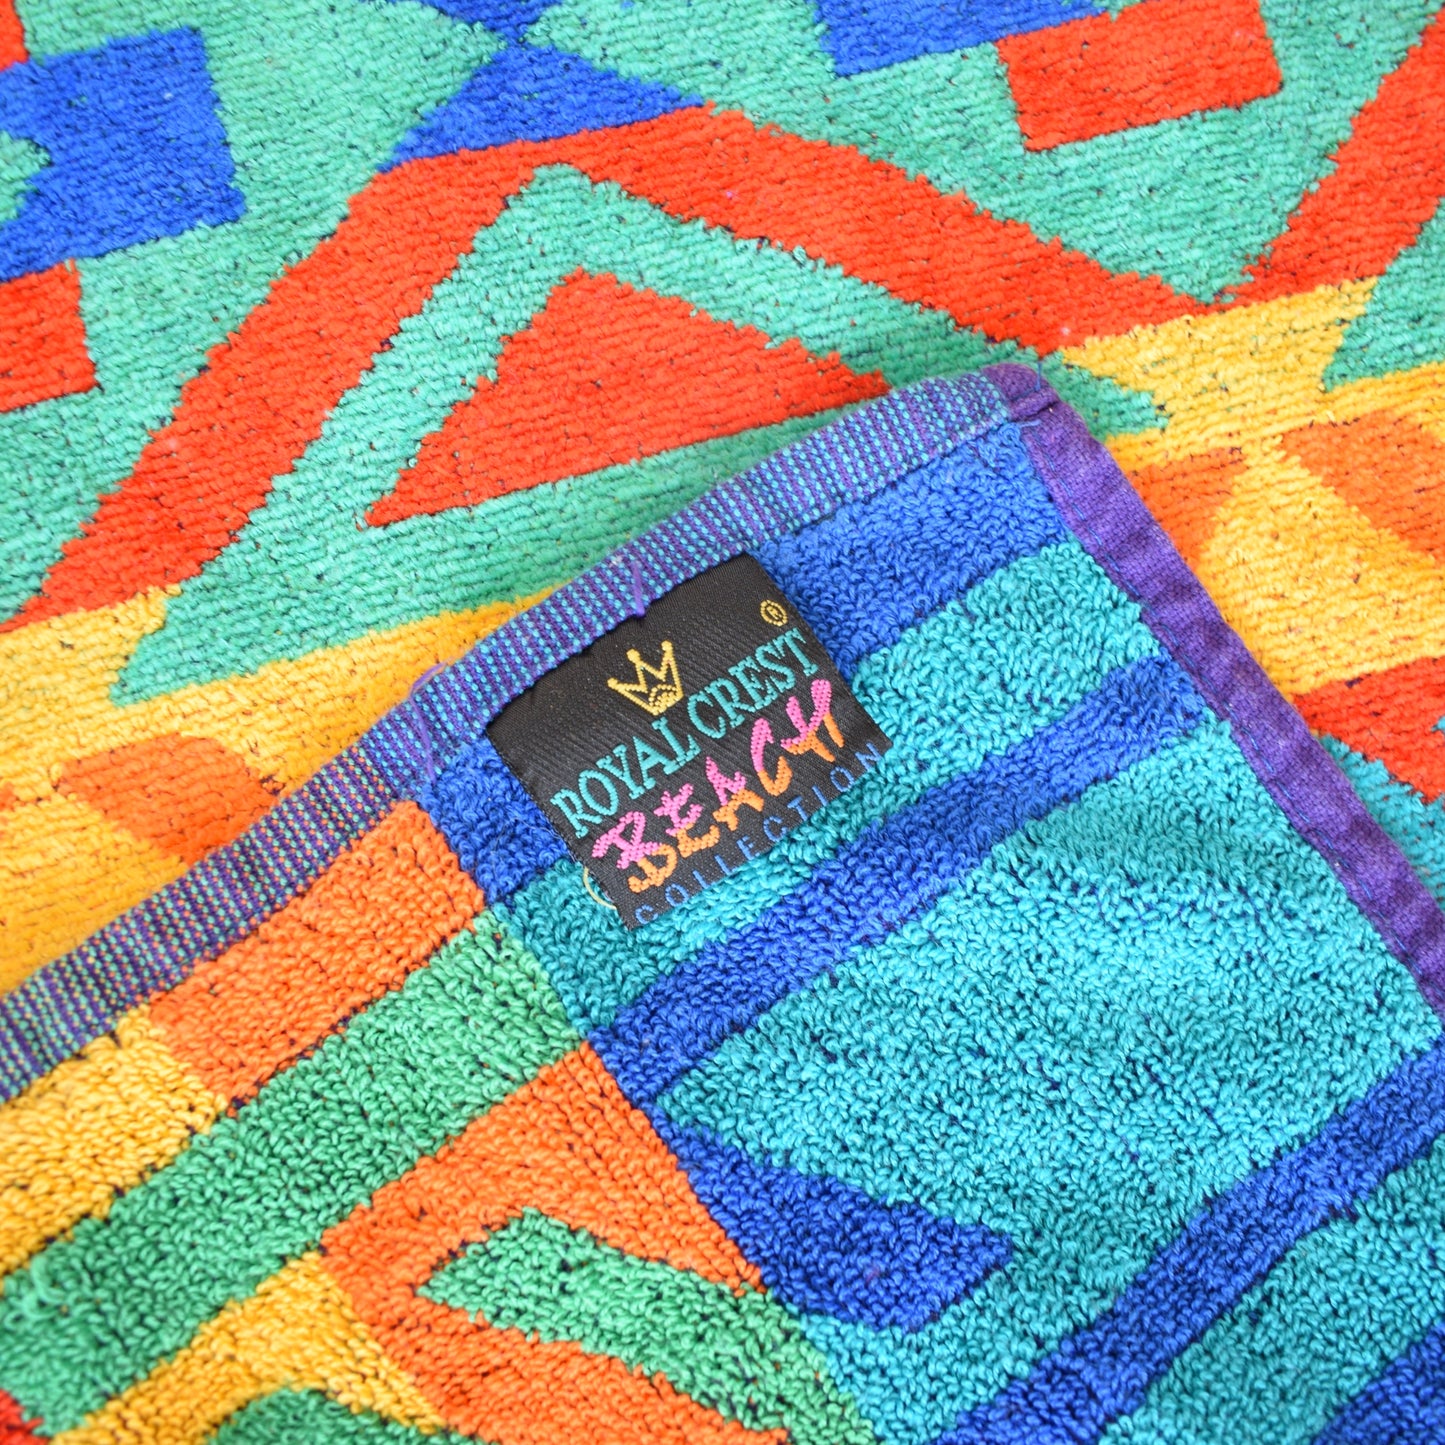 Vintage 1980s Beach Holiday Towel - Bright